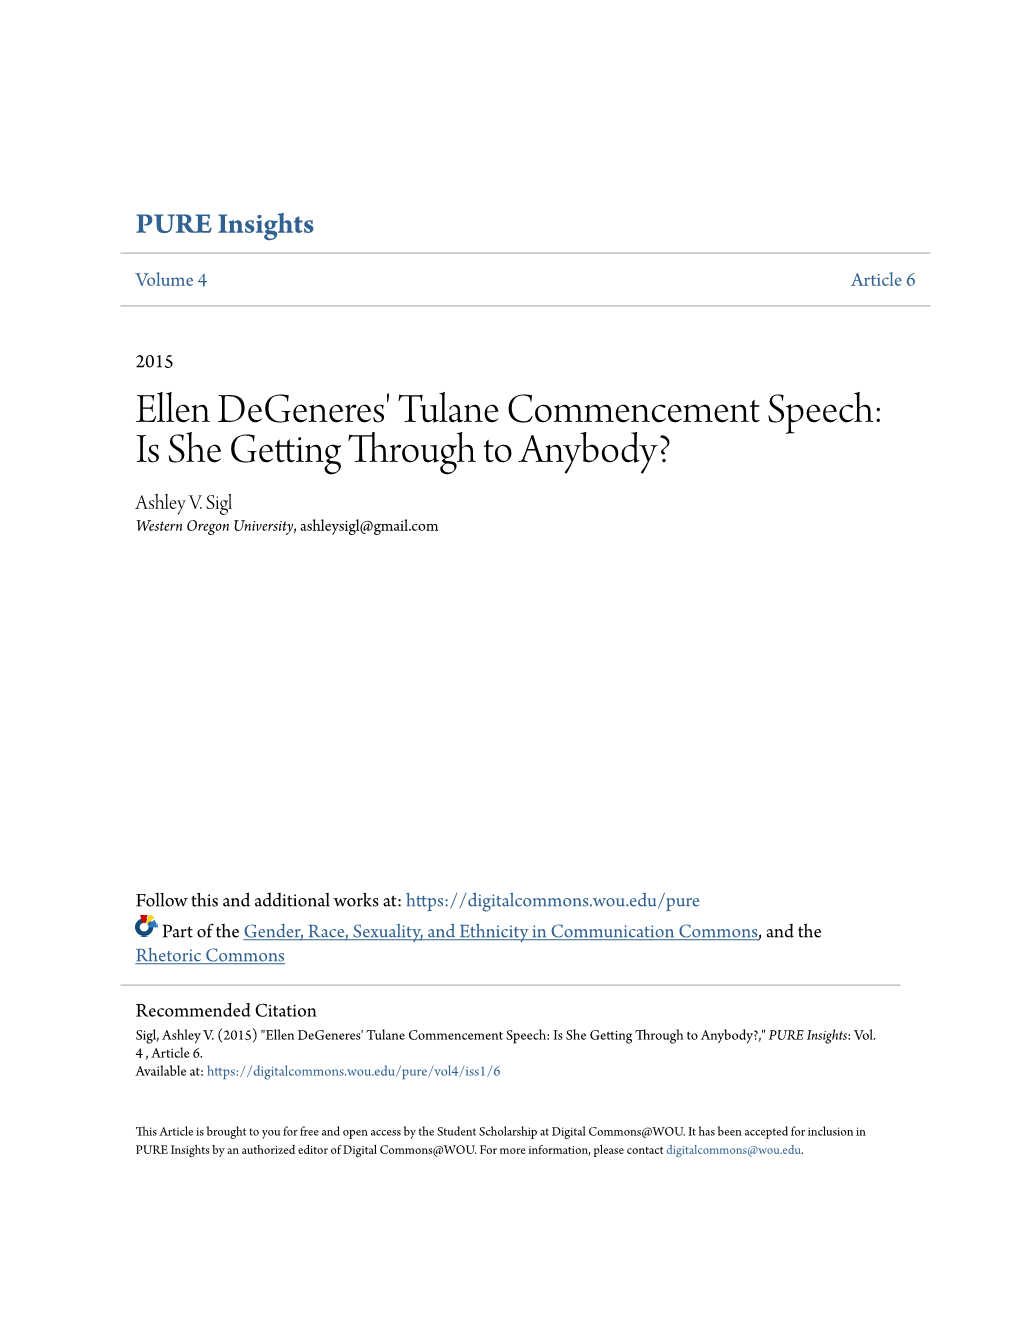 Ellen Degeneres' Tulane Commencement Speech: Is She Getting Through to Anybody? Ashley V